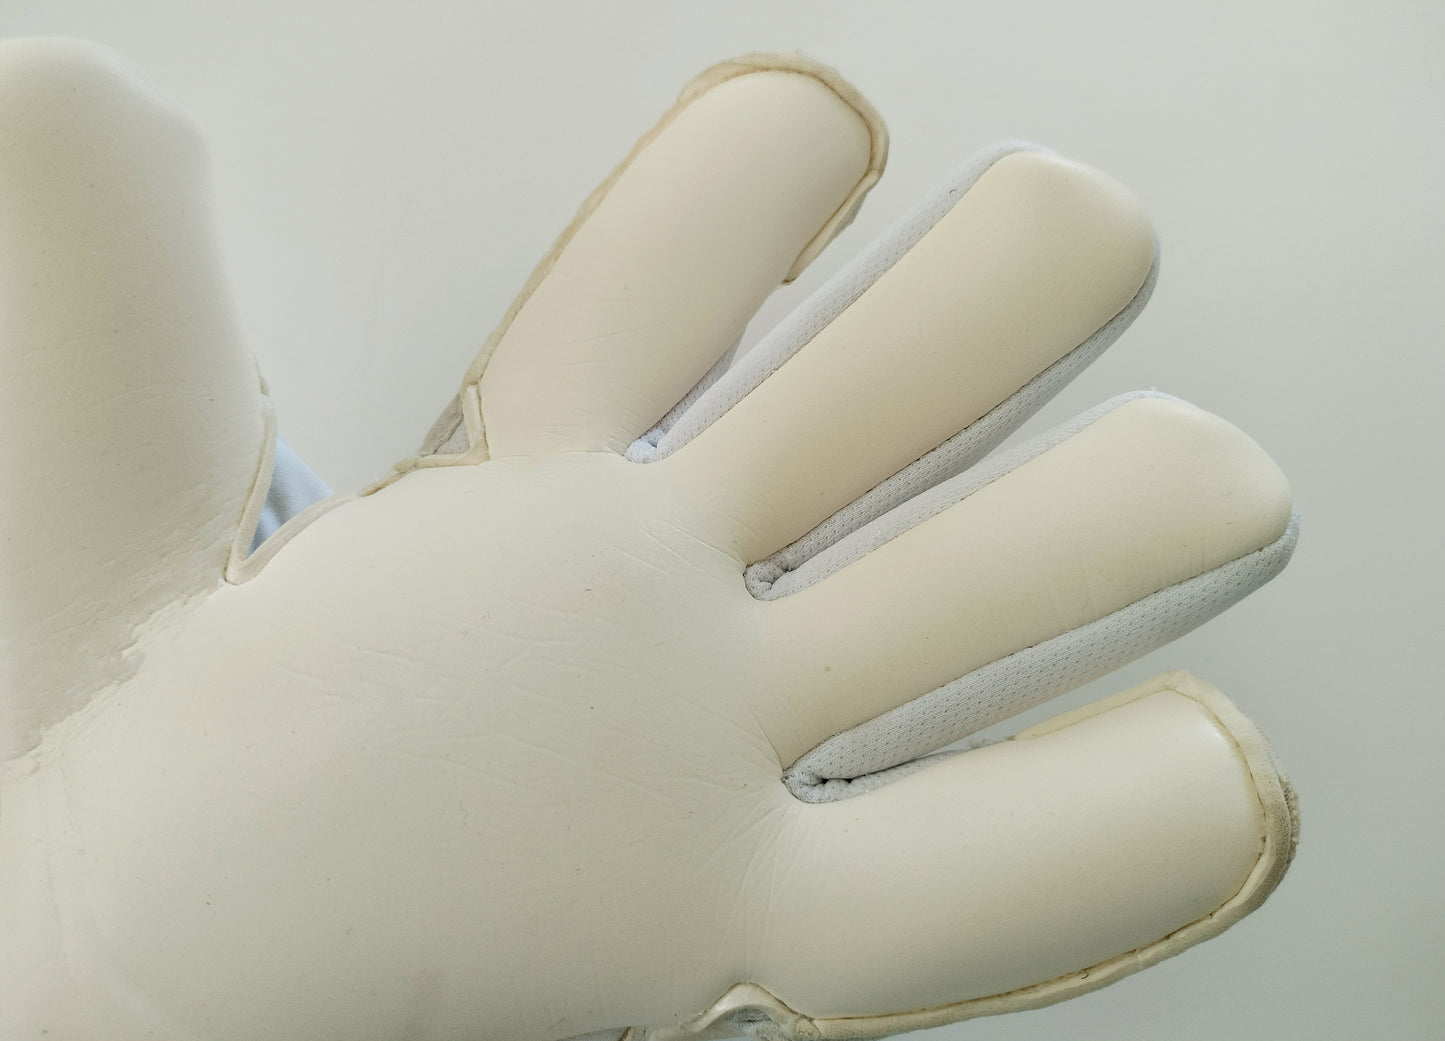 Altro Glove I - 2024 Reissue // Contact grip